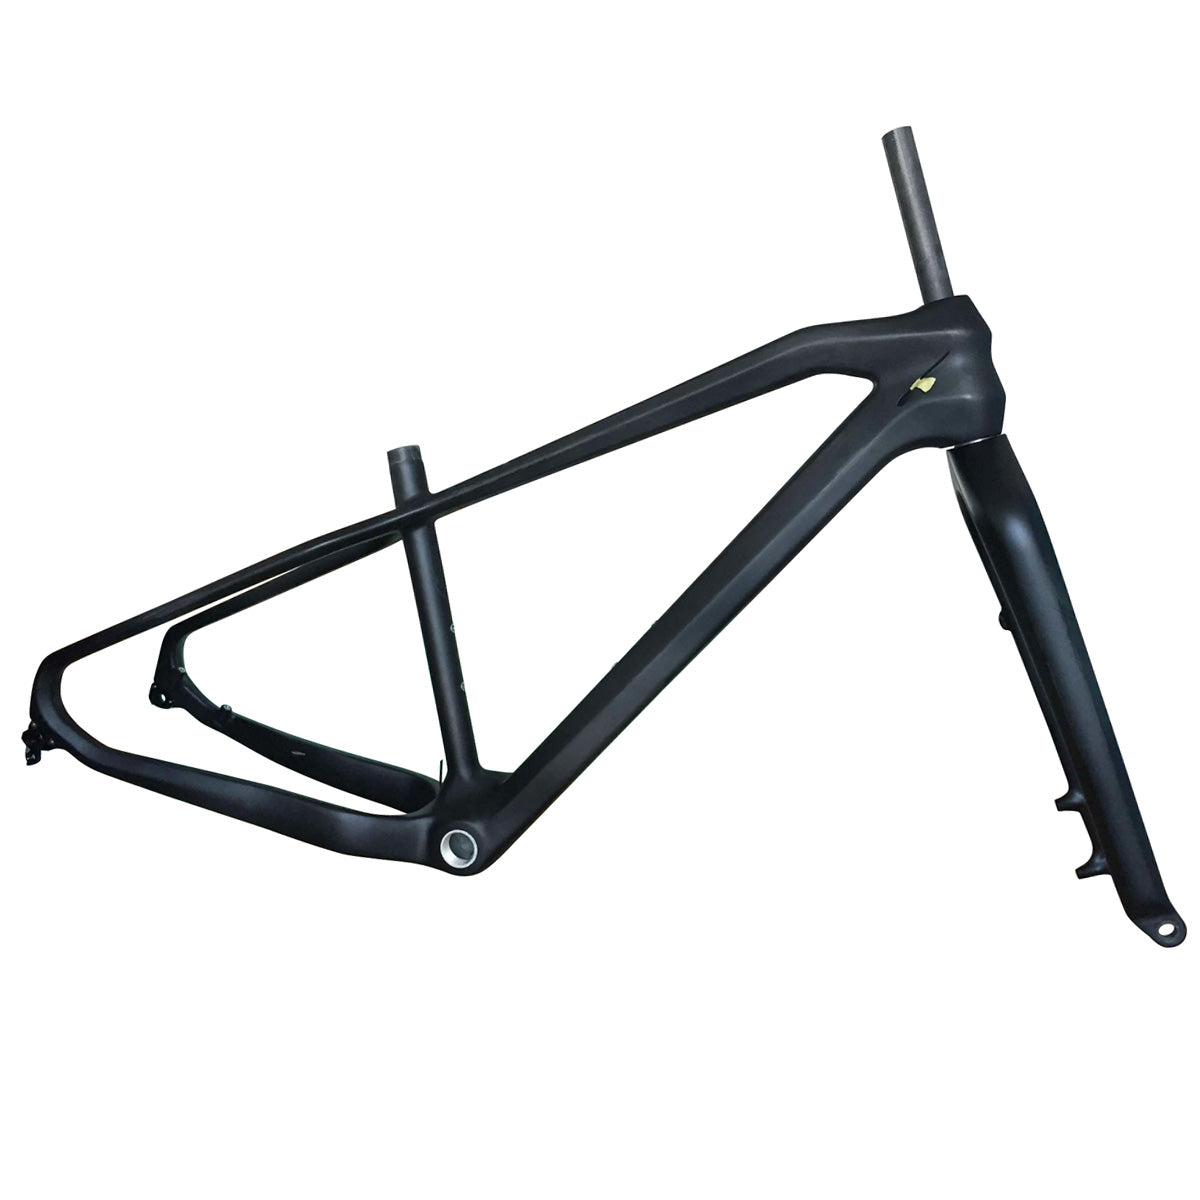 verliezen Vertellen Categorie 26er Carbon hardtail Fat Bike Frame SN02:1520g – ICAN Cycling